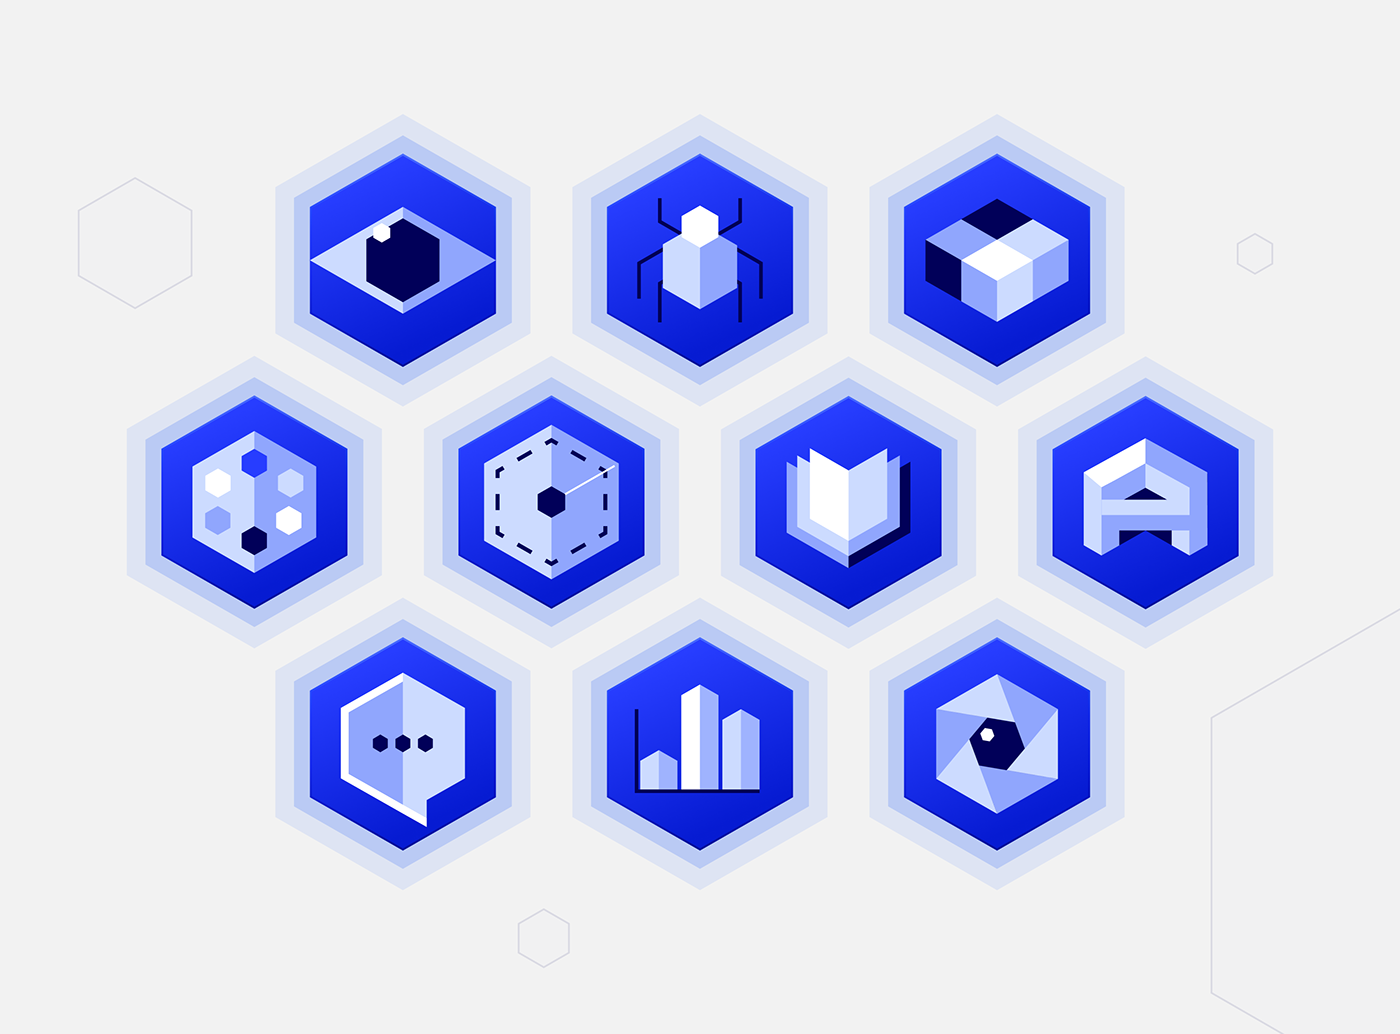 Showcasing of a selection of custom icons designed for NEXTPART’s platform.